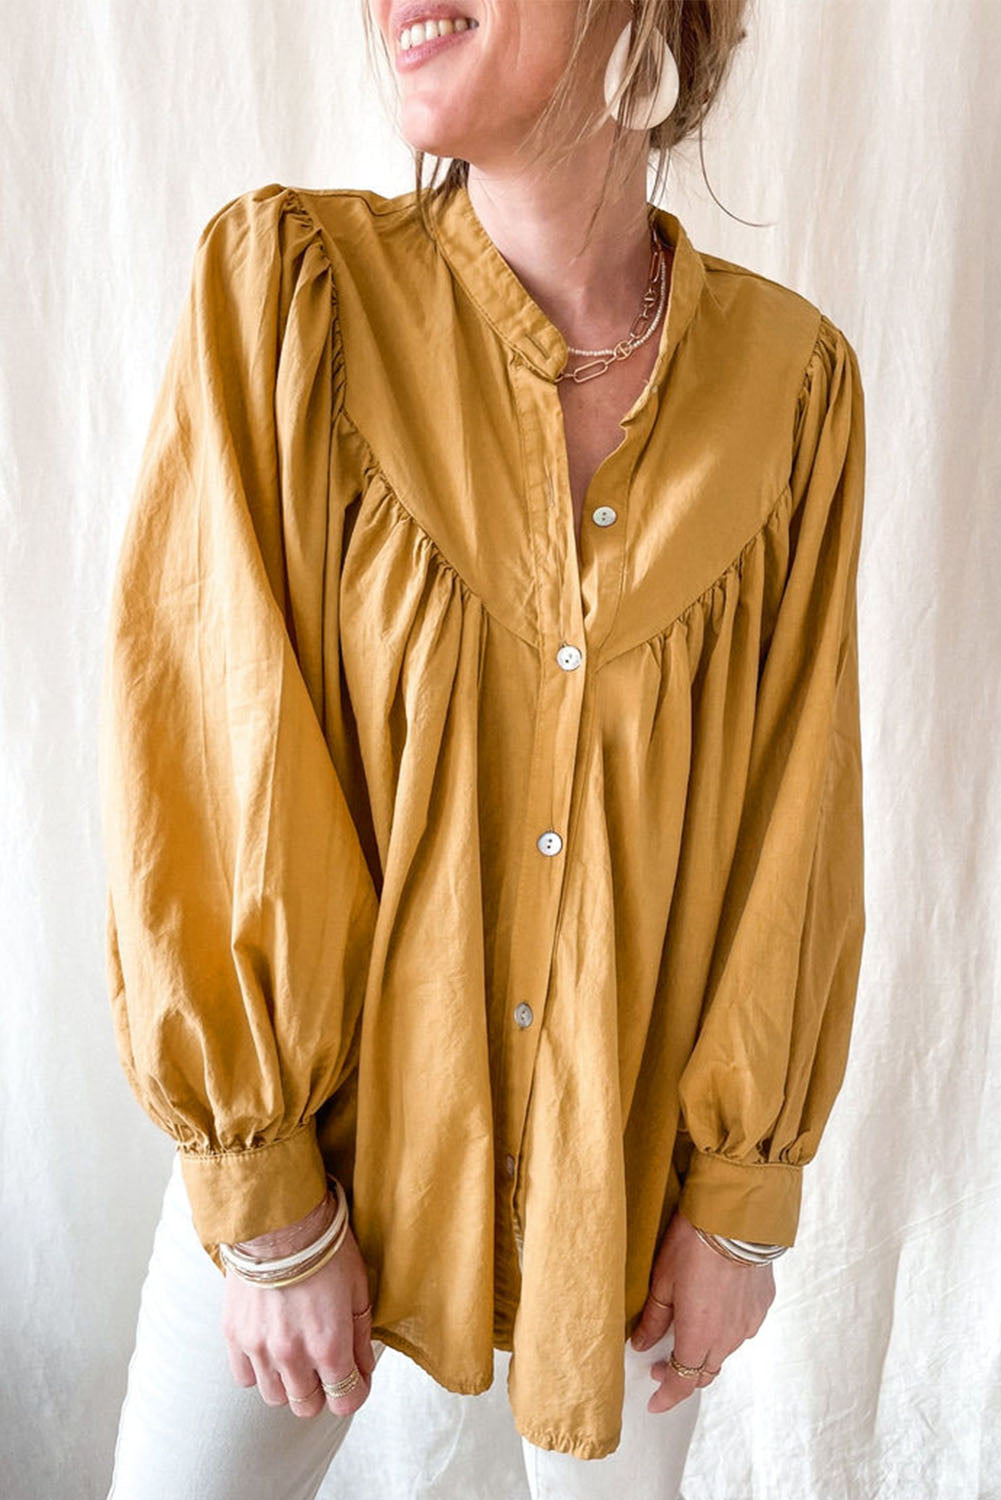 Rumena ohlapna srajca z nagubanimi rokavi